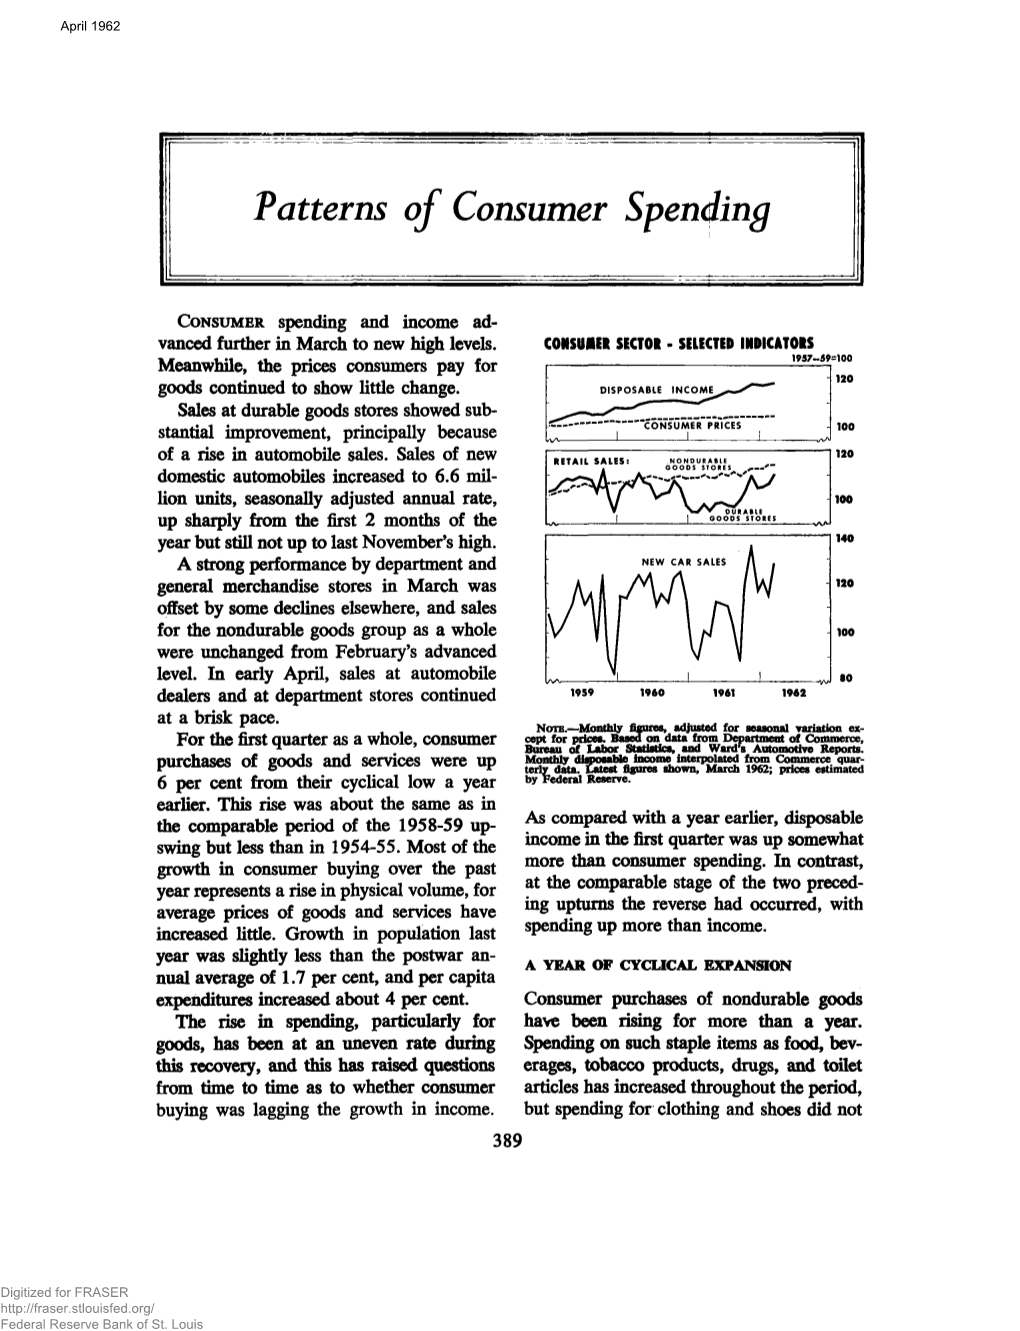 Patterns of Consumer Spending